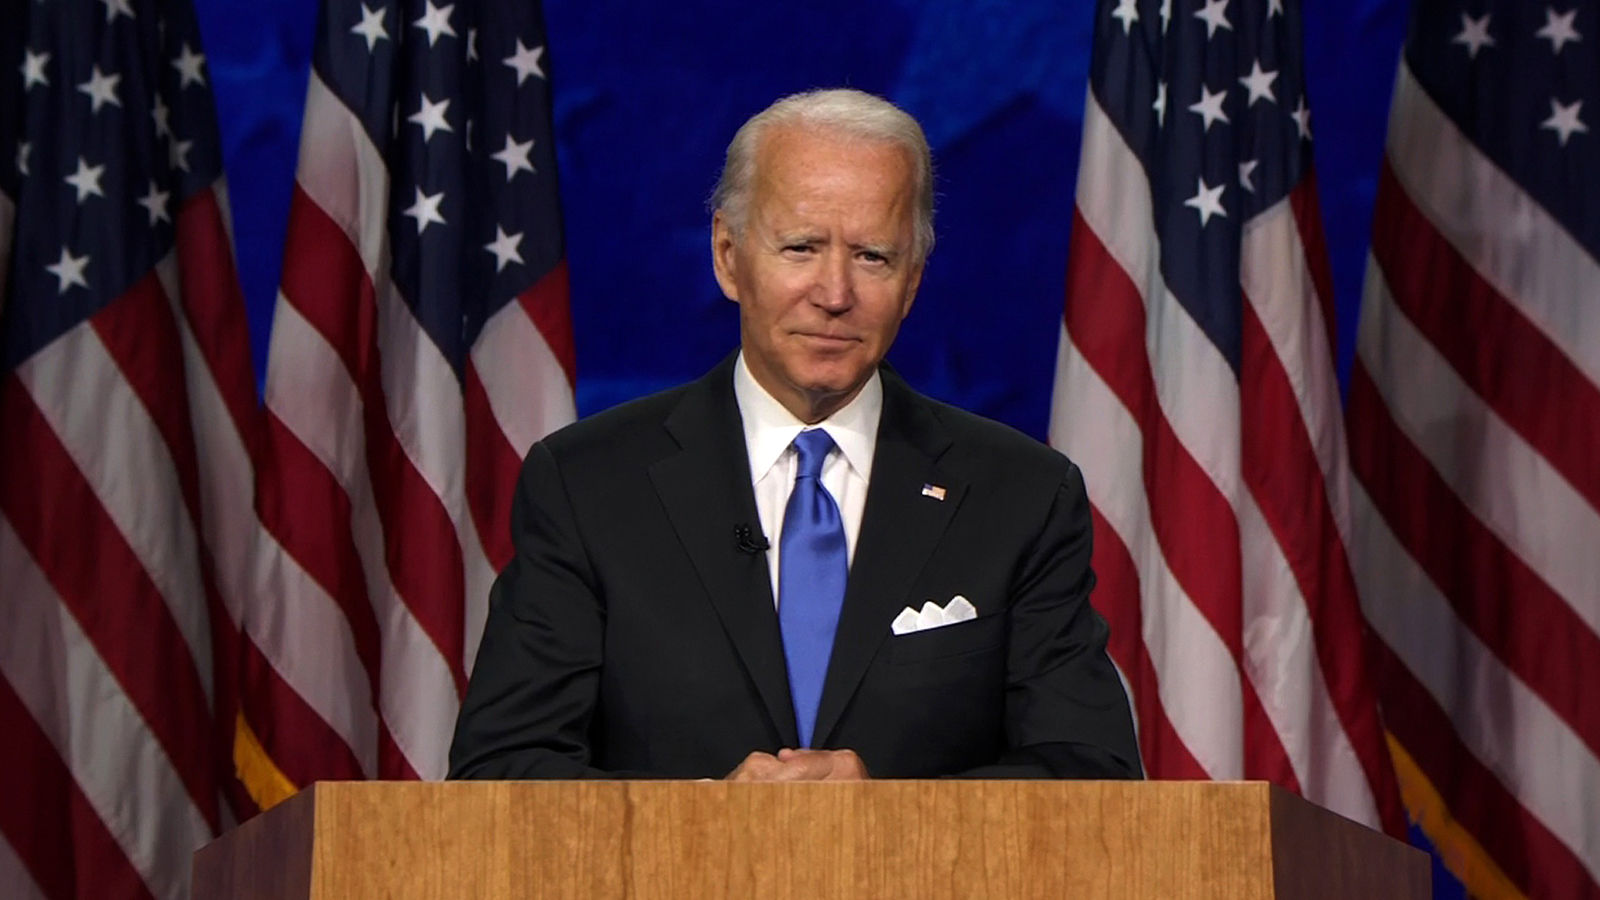 Joe Biden accepts Democratic presidential nomination; vows to end ‘season of darkness’